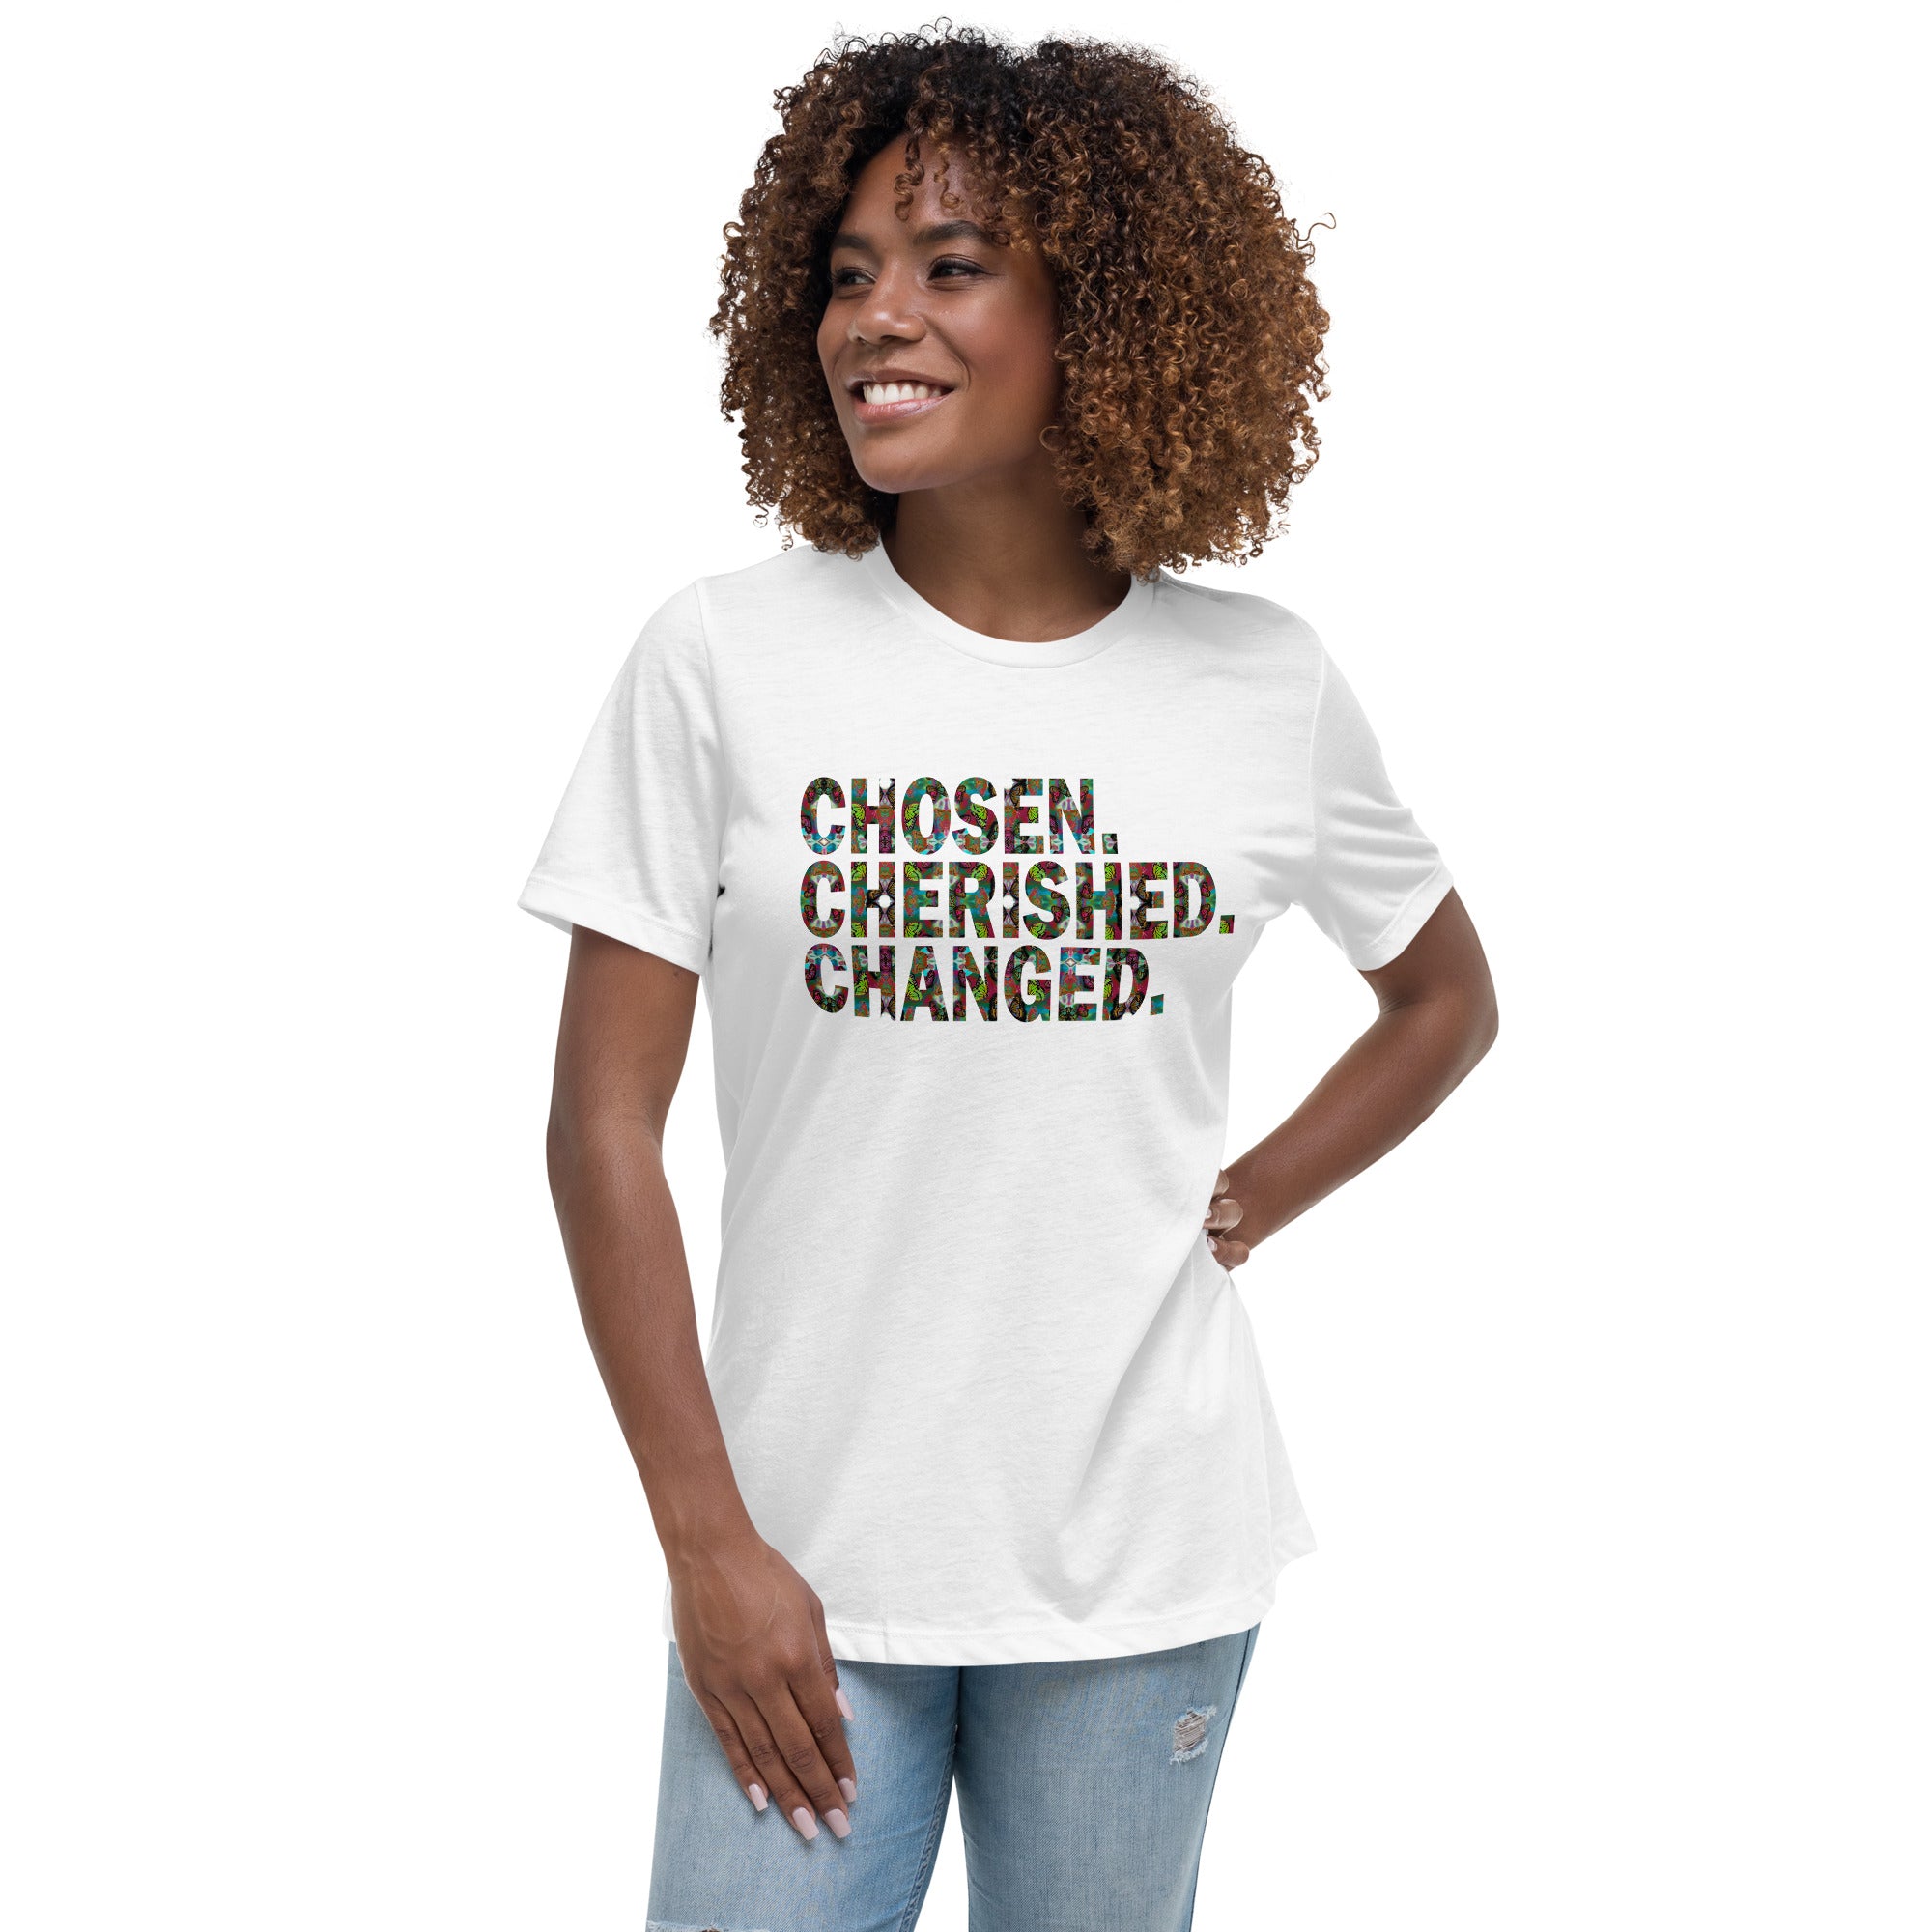 Chosen. Cherished. Changed. Women's Buttefly Word Art Graphic T-Shirt